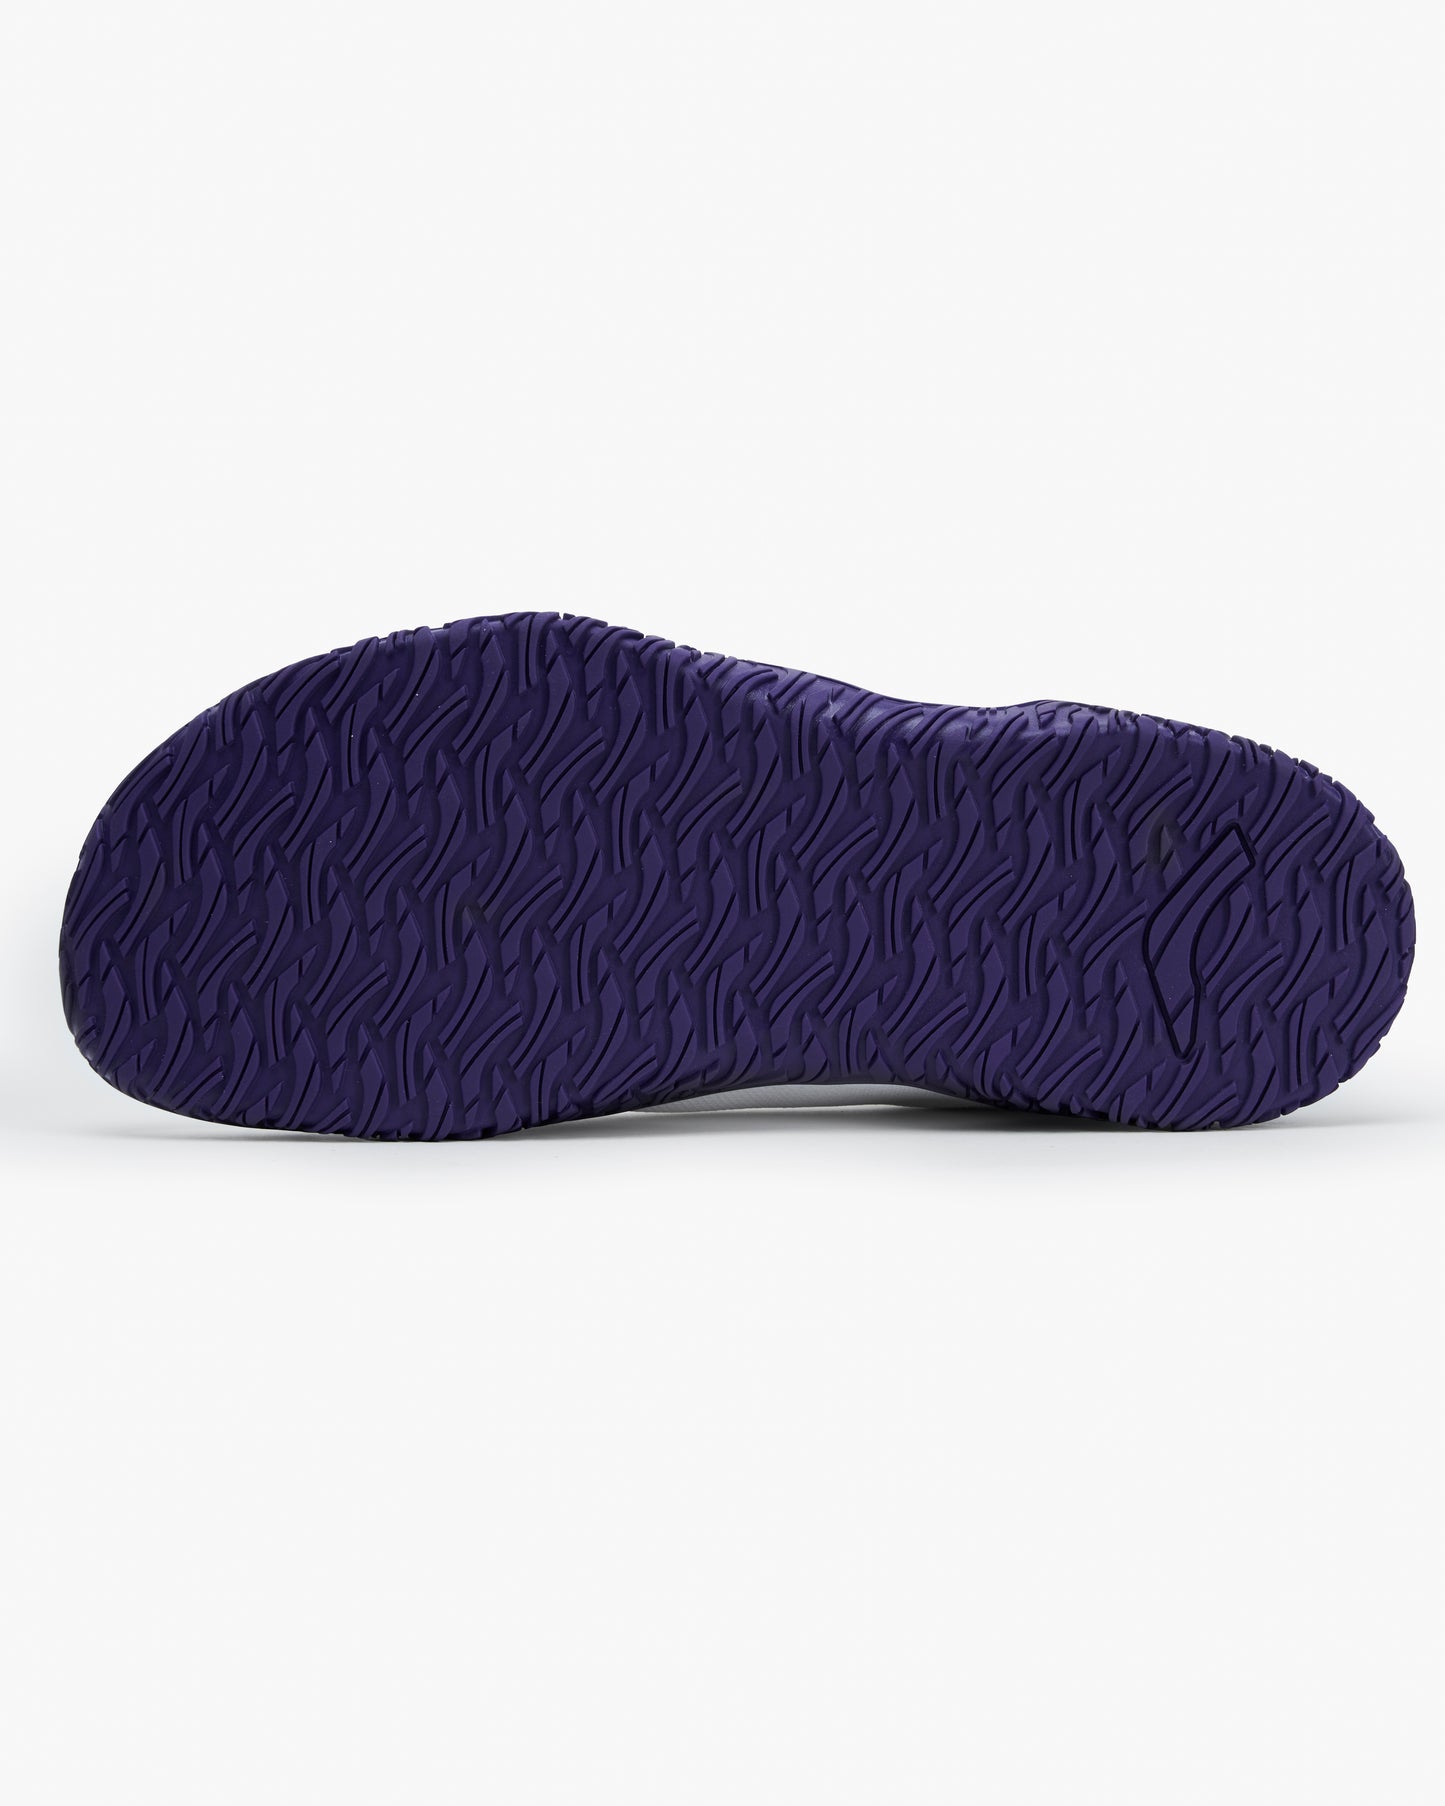 Avancus Apex Power Shoes 1.5 (White/Purple)